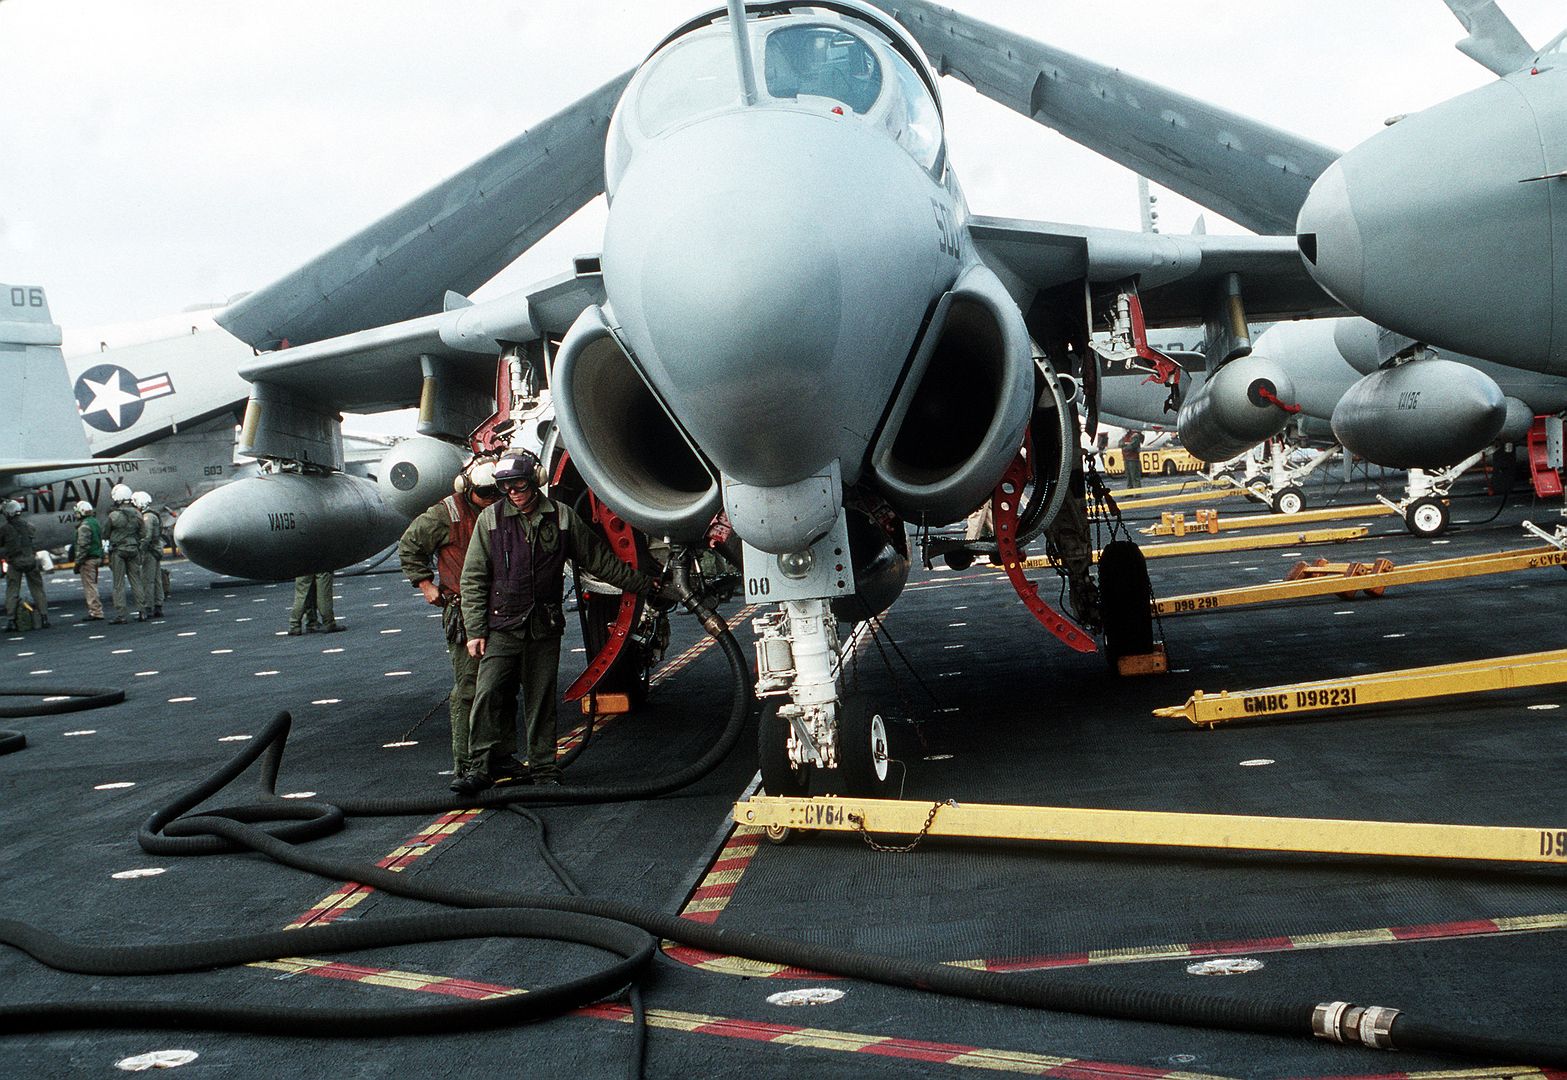 An Aviation Fuels Crew Member Refuels An Attack Squadron 196 A 6E Intruder Aircraft Aboard The Aircraft Carrier USS CONSTELLATION